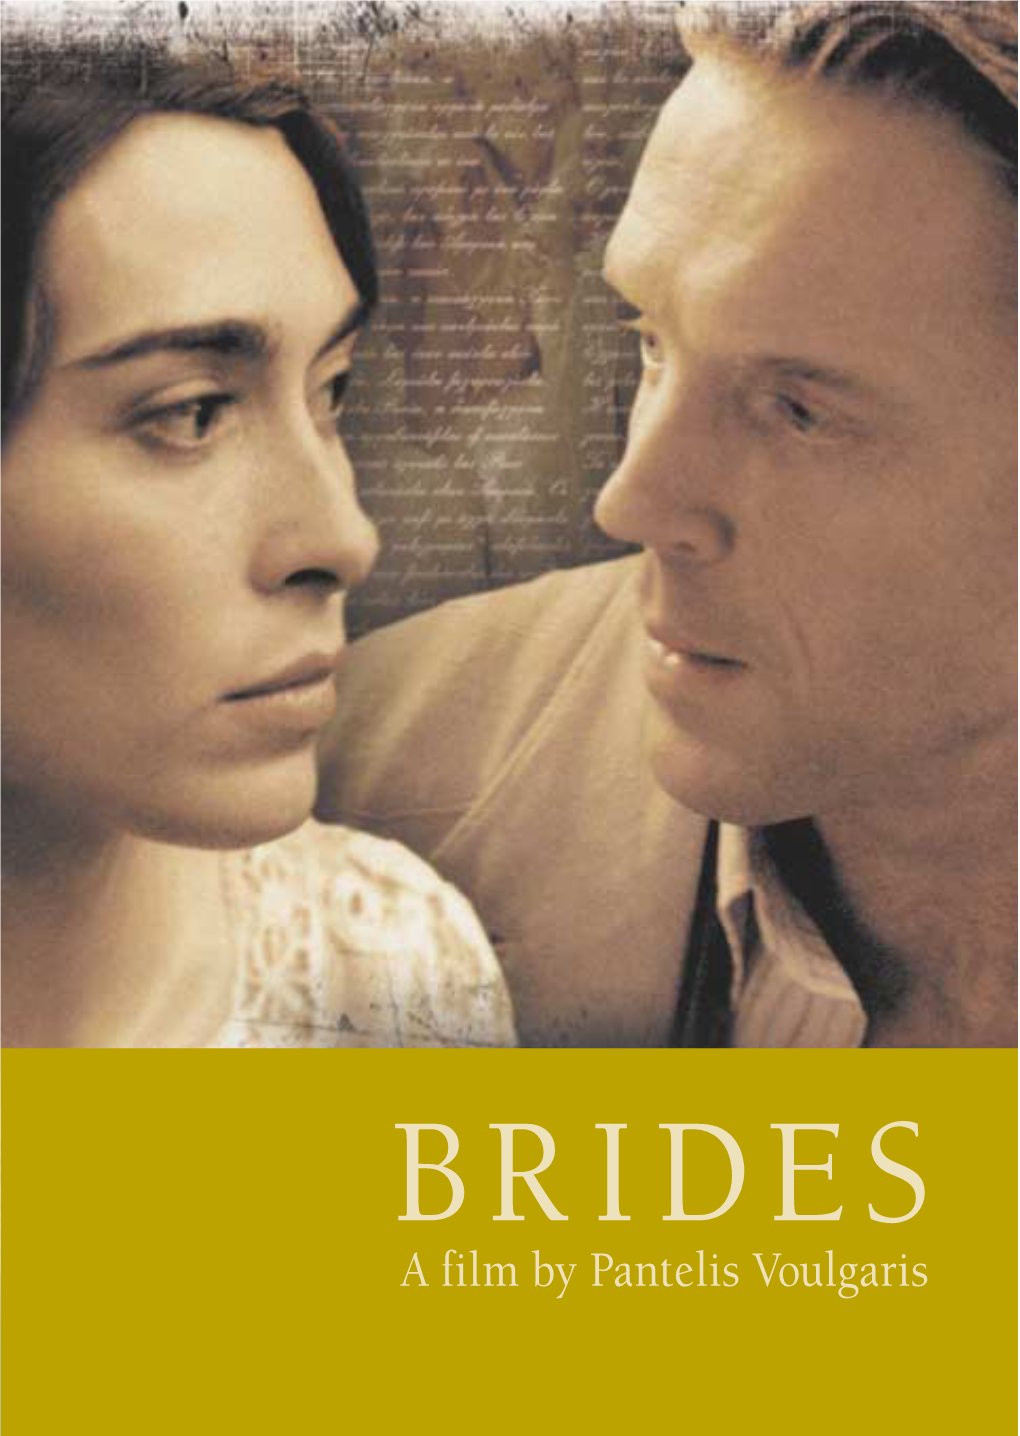 A Film by Pantelis Voulgaris BRIDES by Pantelis Voulgaris